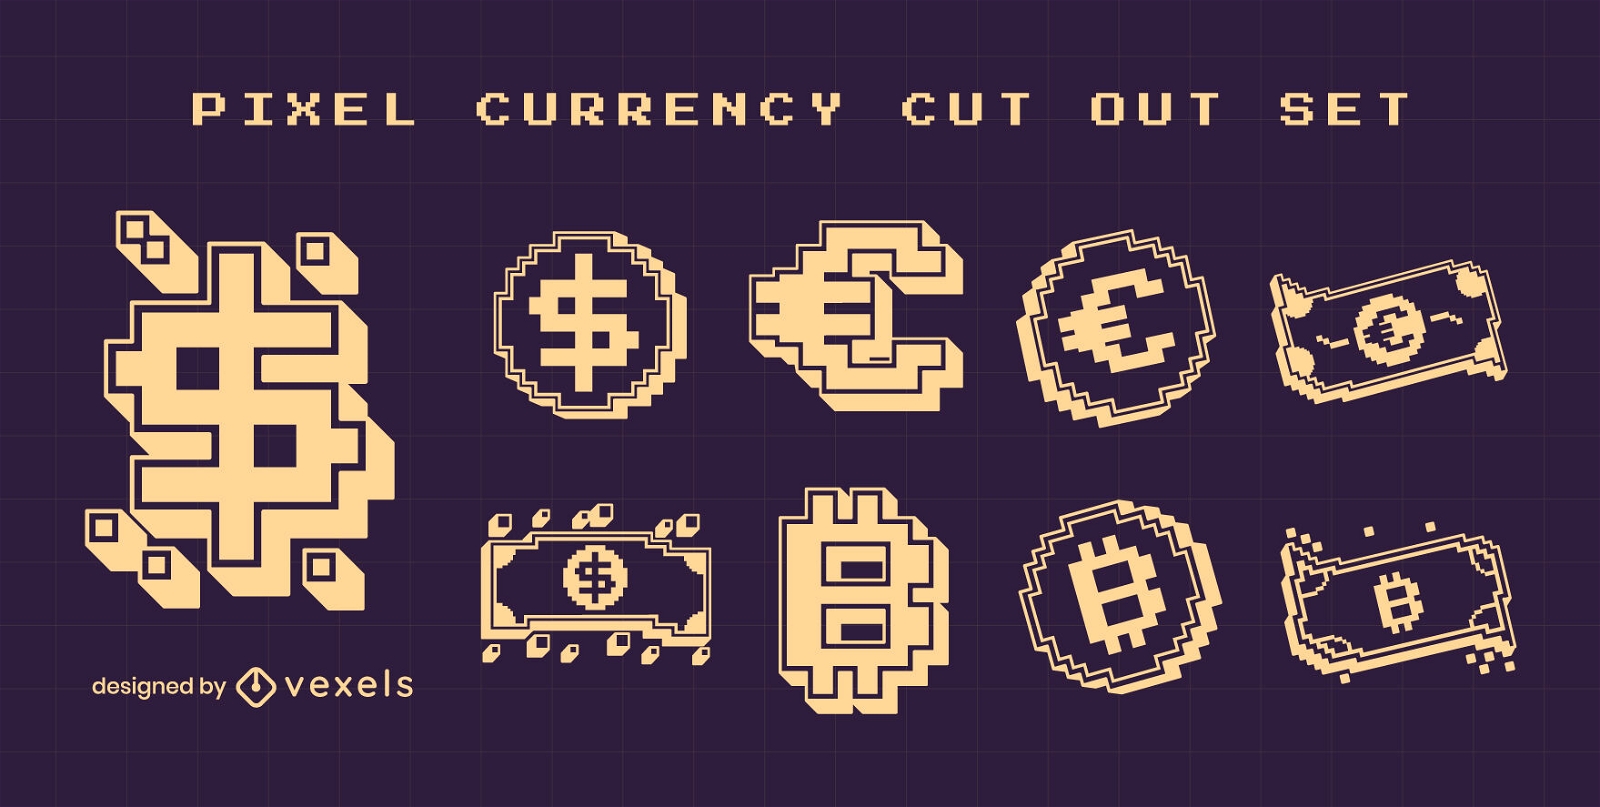 Currency symbols cut out pixel art set